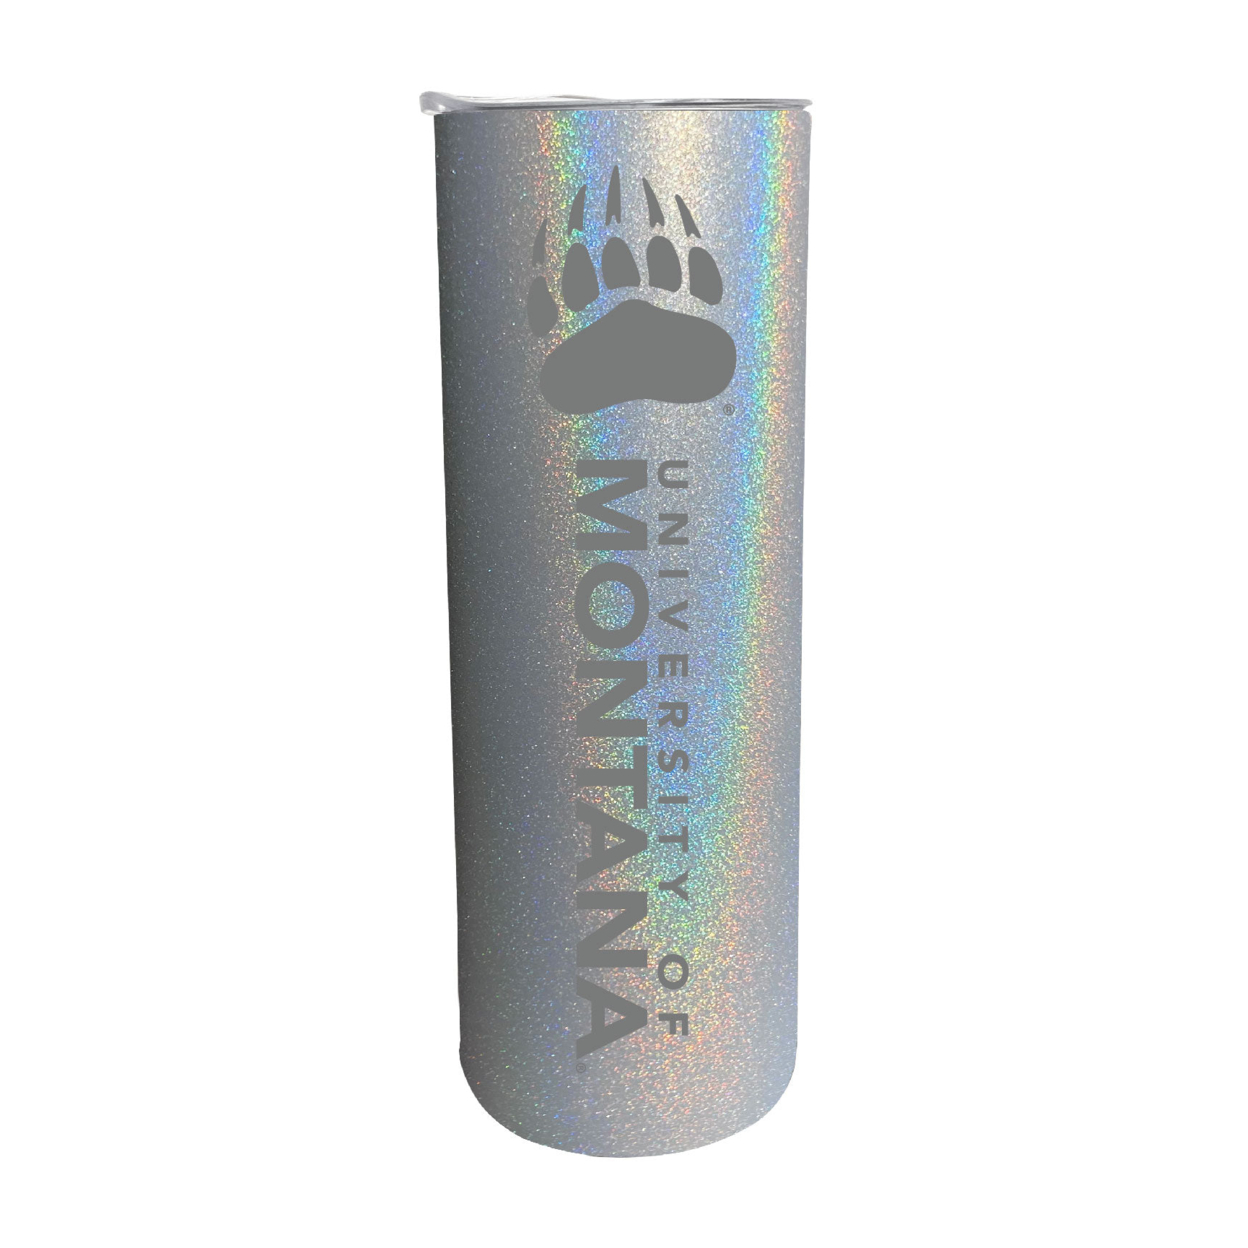 Montana University 20oz Insulated Stainless Steel Skinny Tumbler - Rainbow Glitter Bla